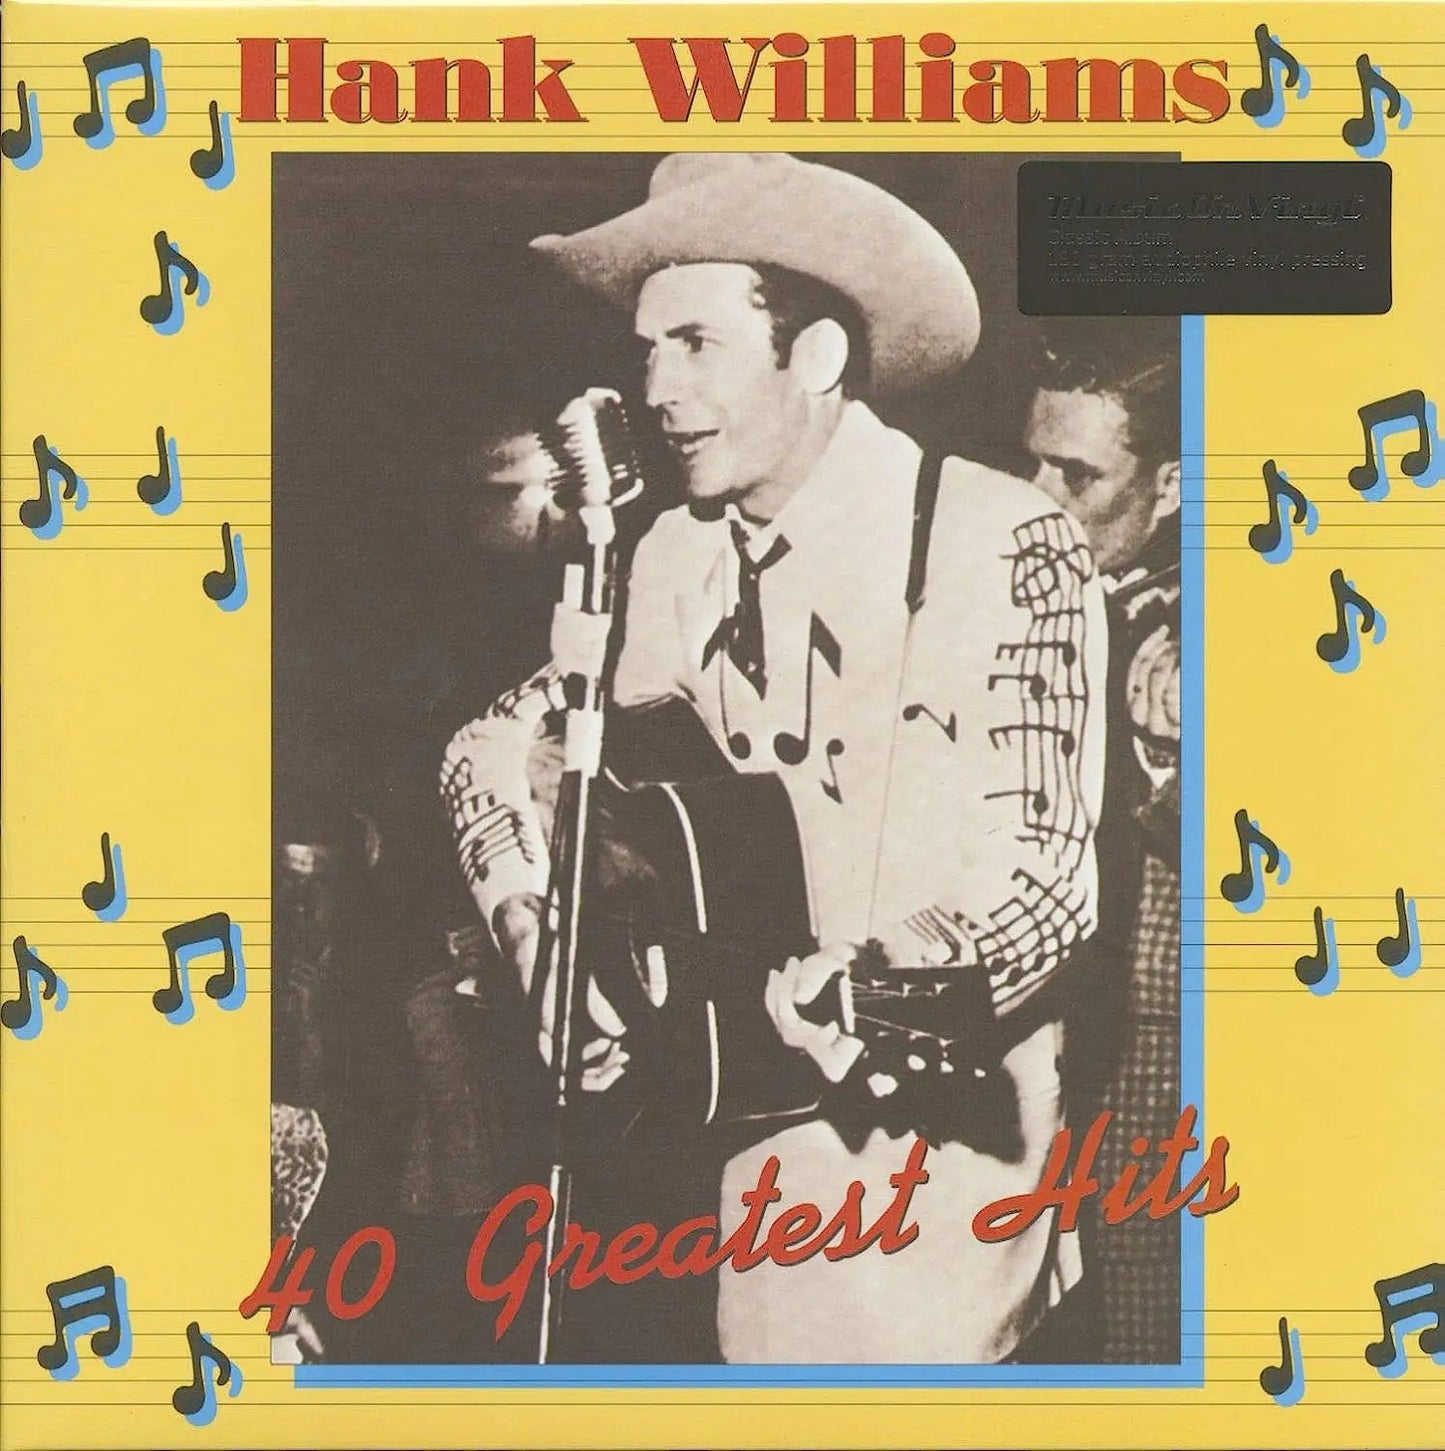 Hank Williams - Hank Williams 40 Greatest Hits [Vinyl 2LP]